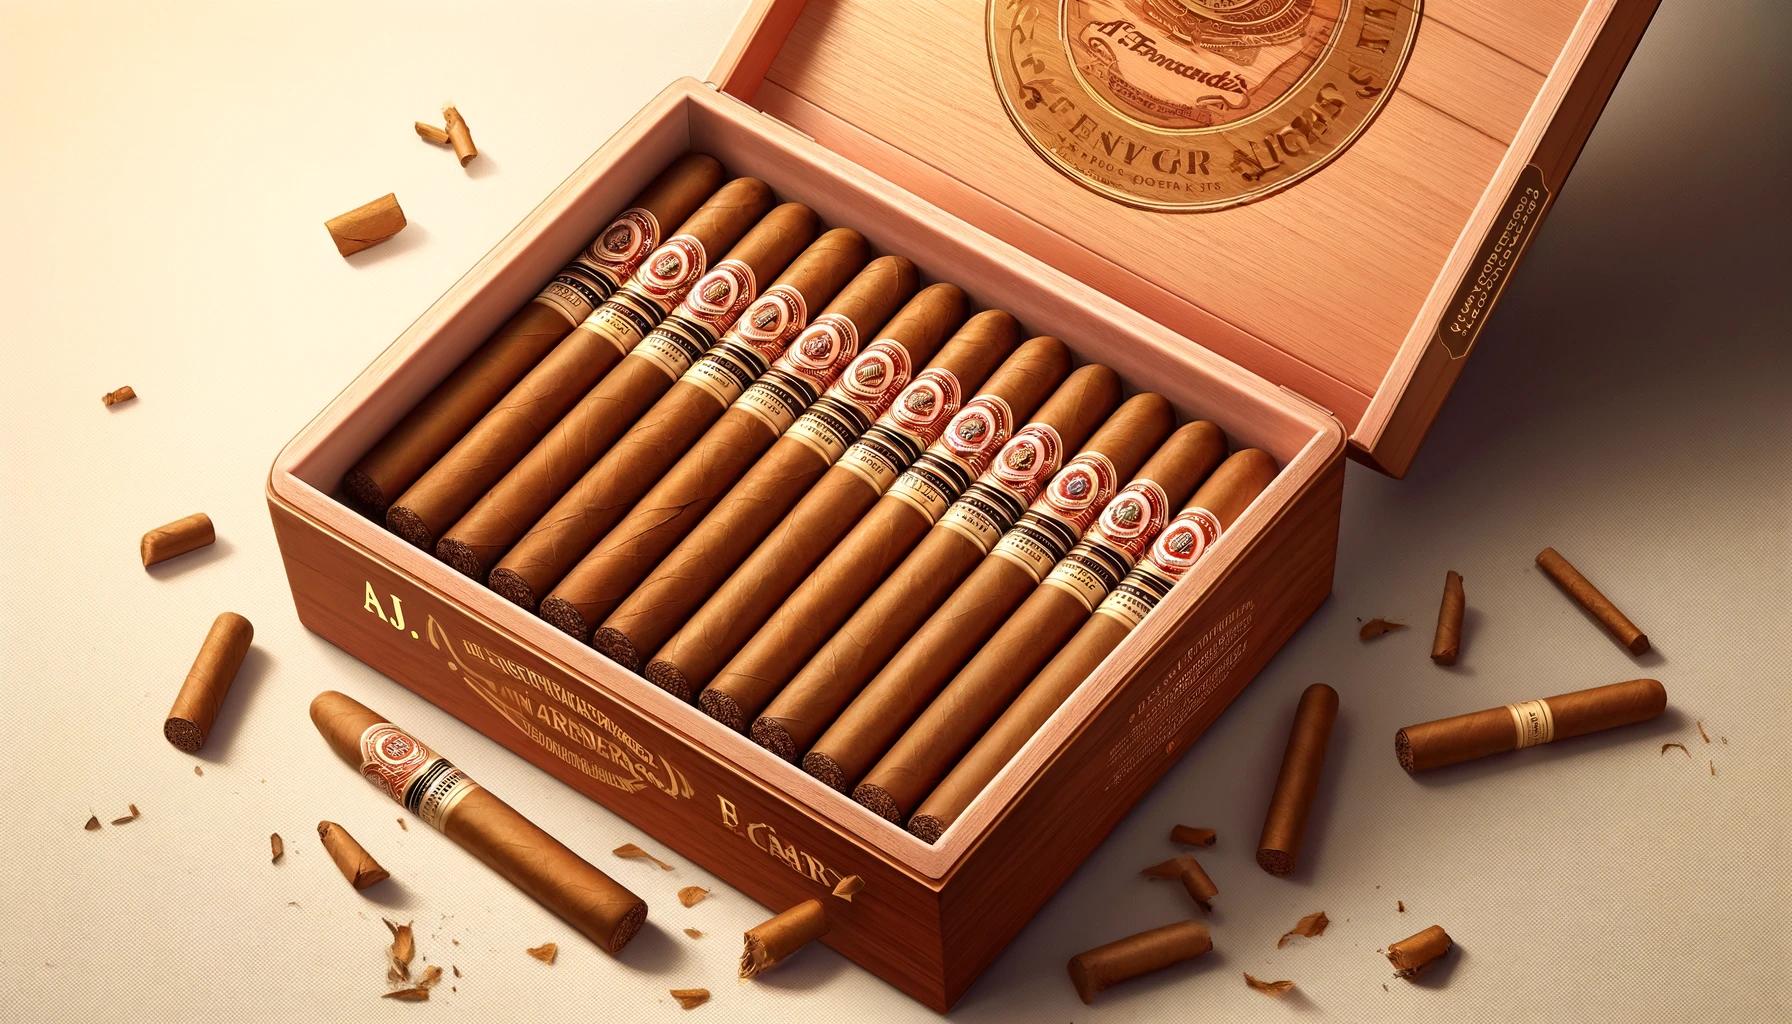 A box of AJ Fernandez Cigars